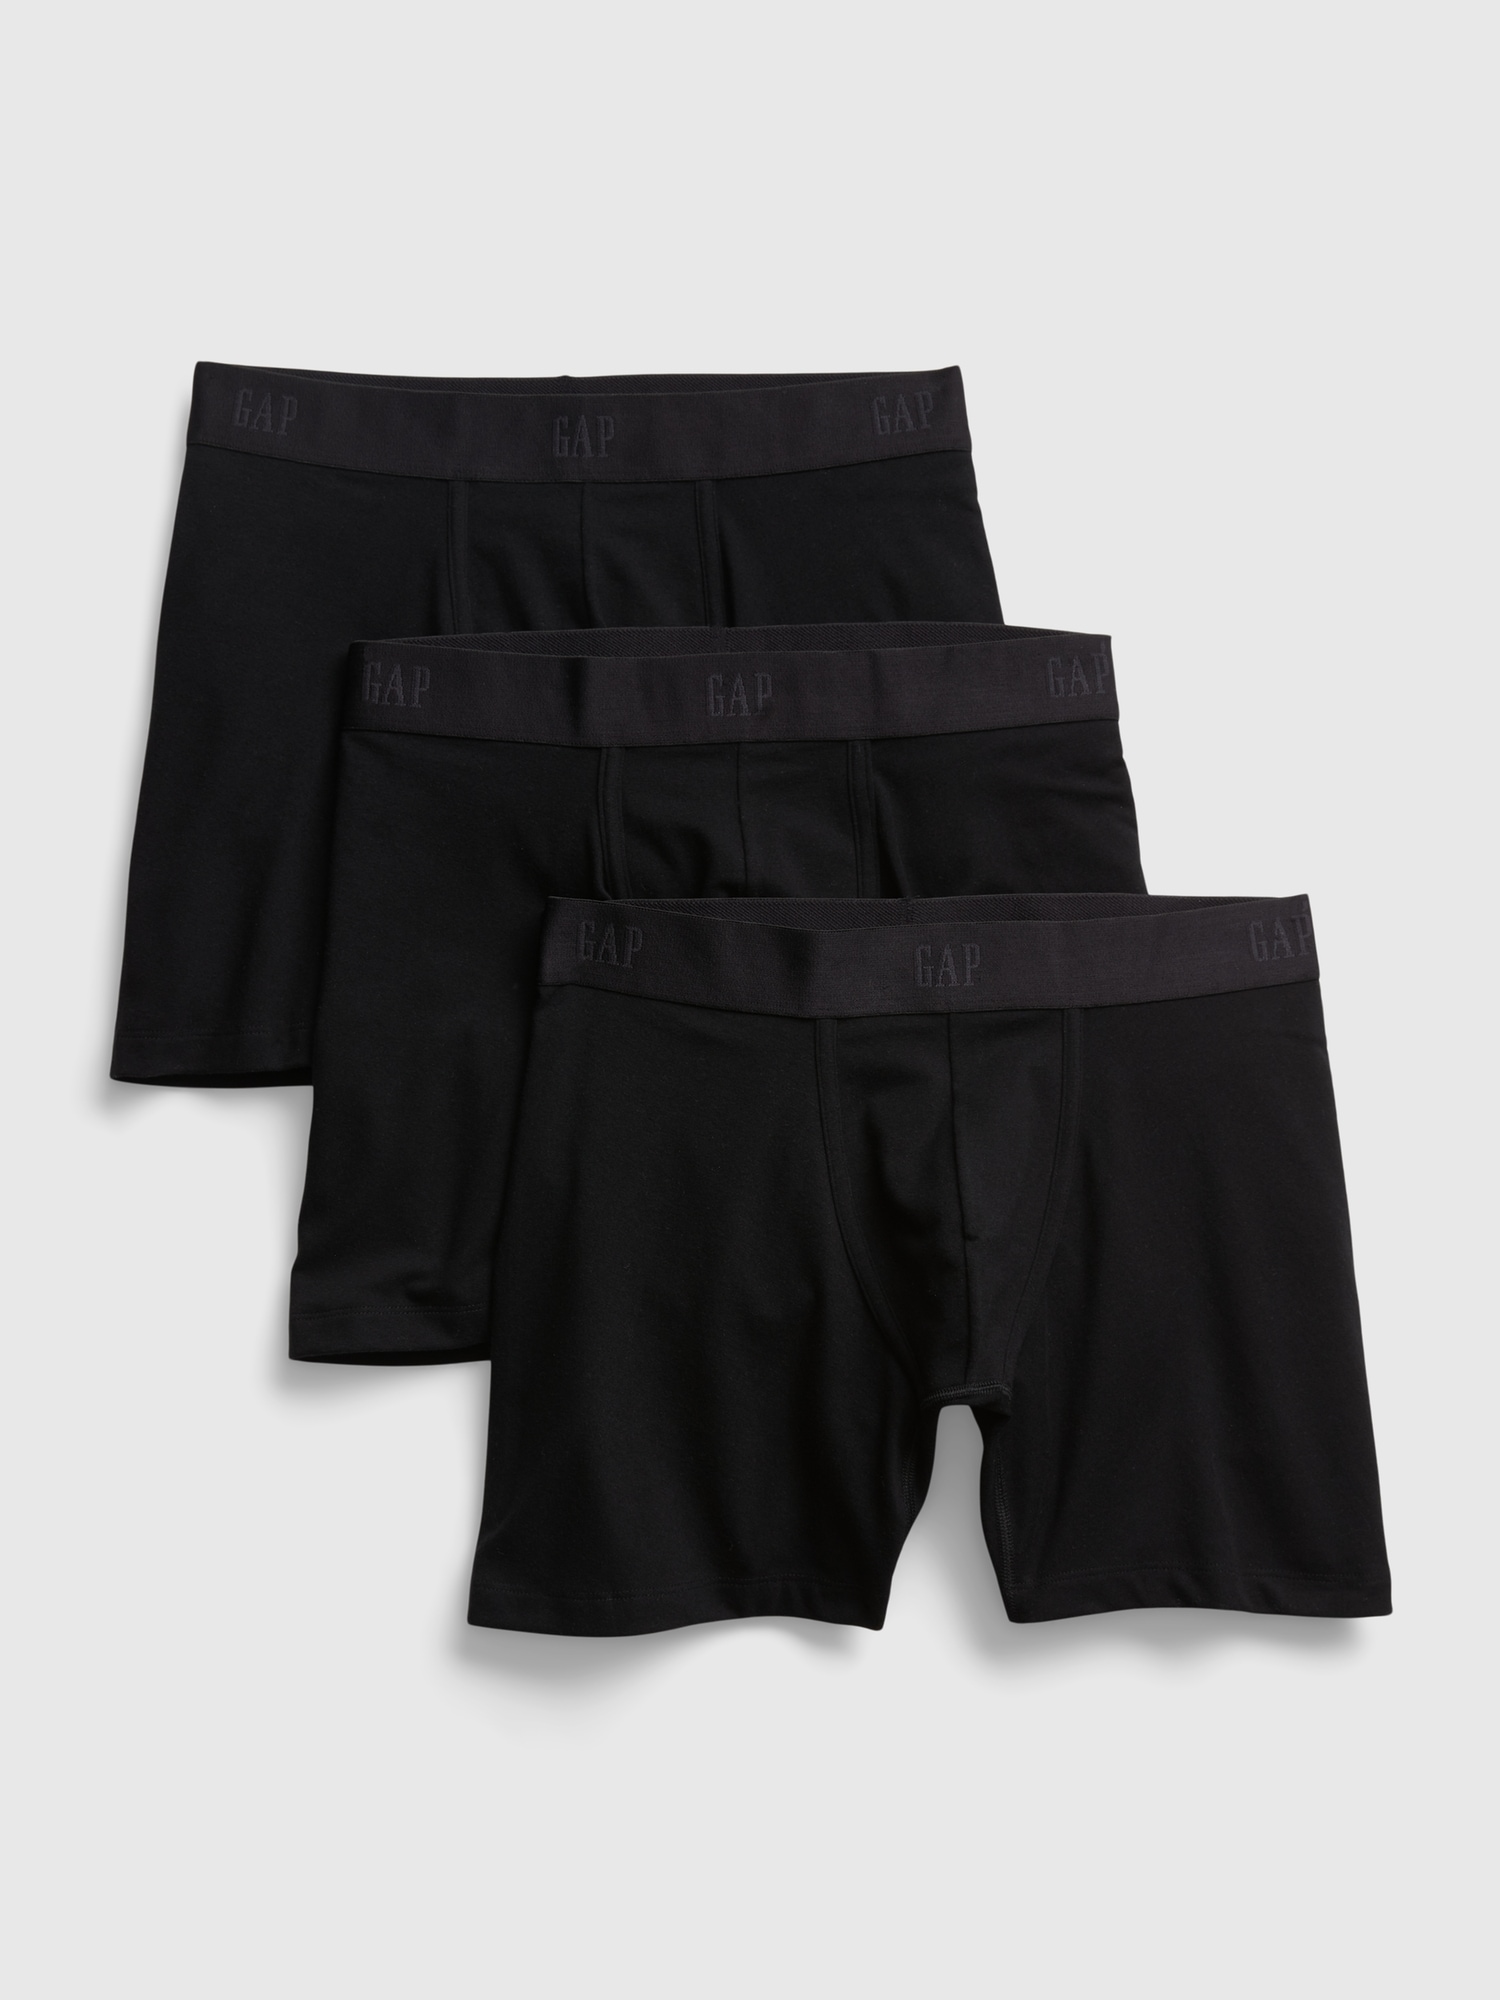 Men's Everyday Comfort Boxer Briefs Pack, Moisture Wicking, Black